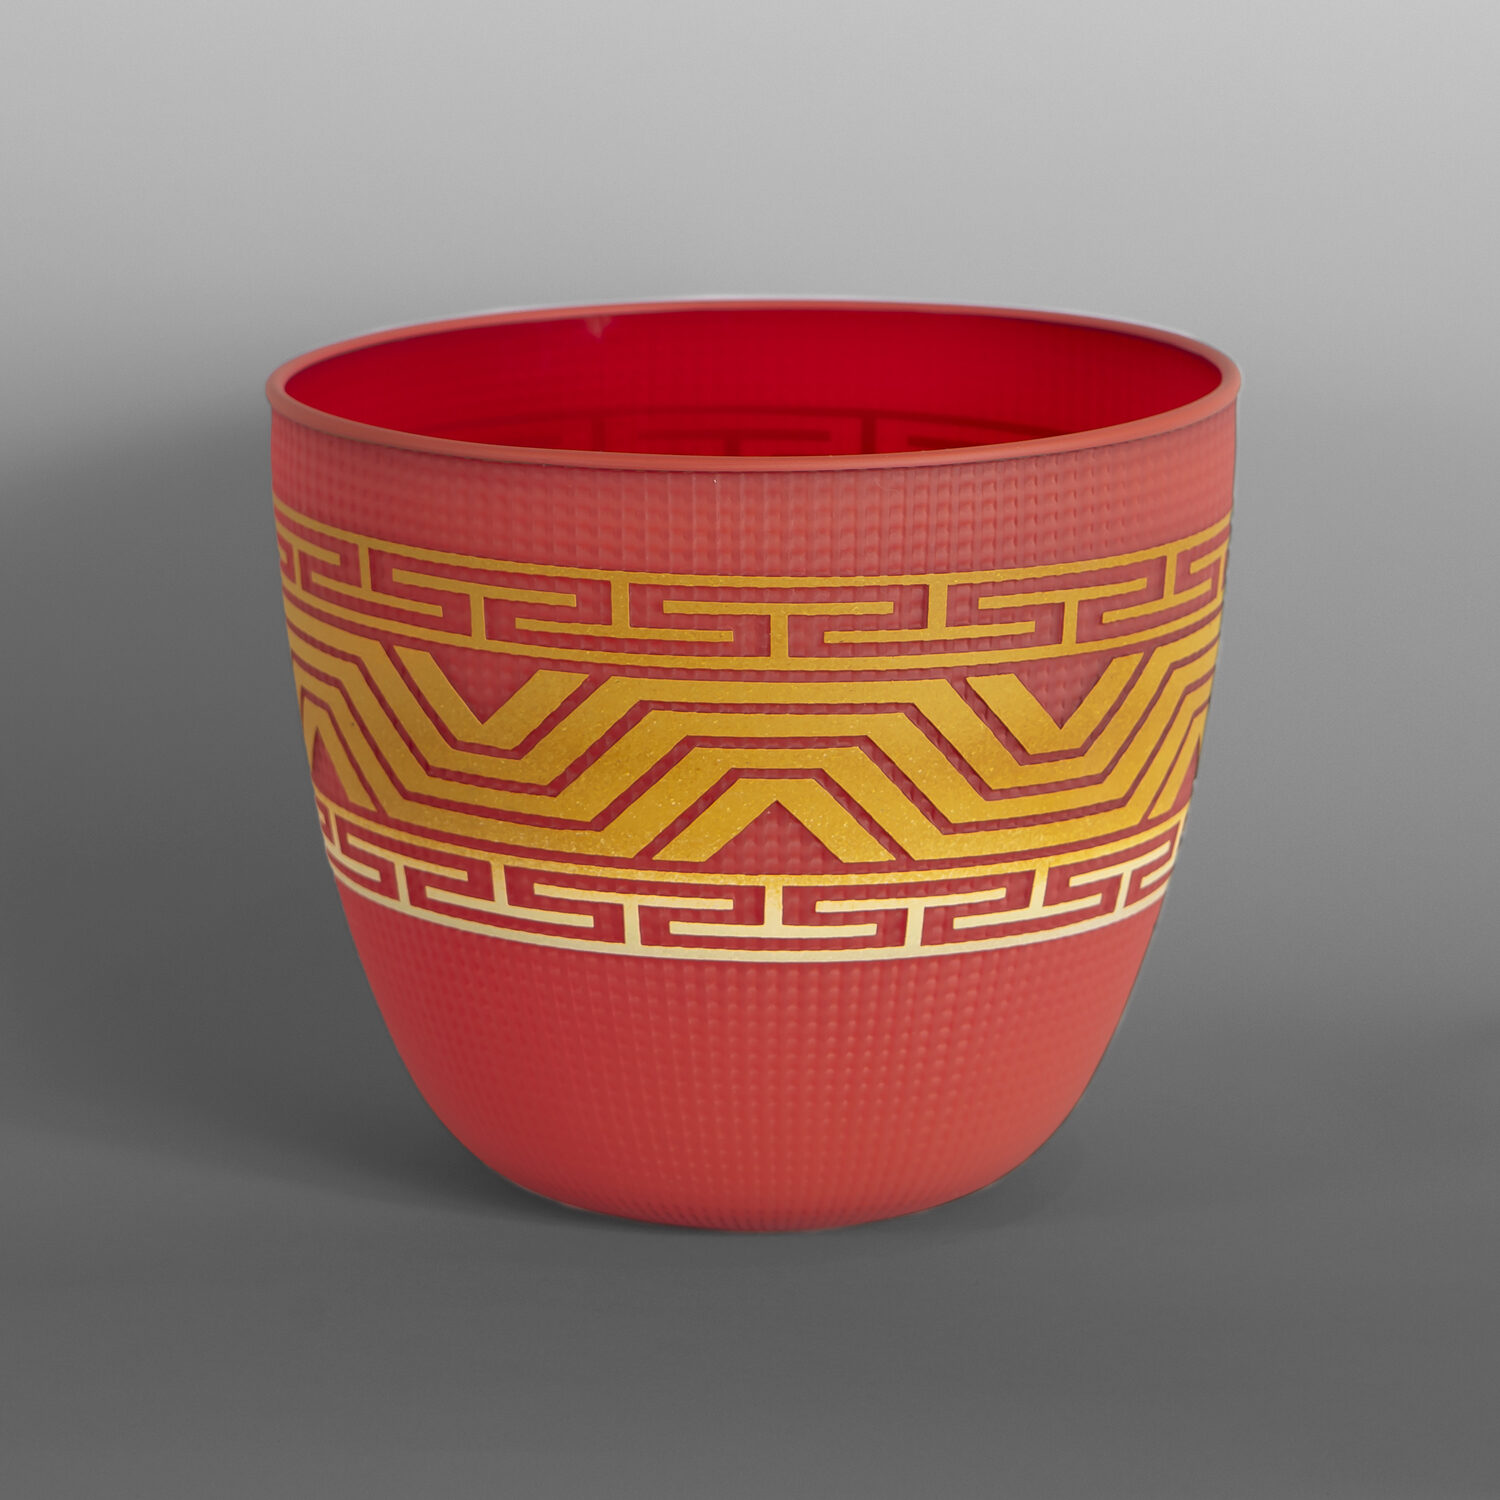 Fiery Red Basket
Preston Singletary
TlingitSand-carved glass
9" x ¾"
$9600